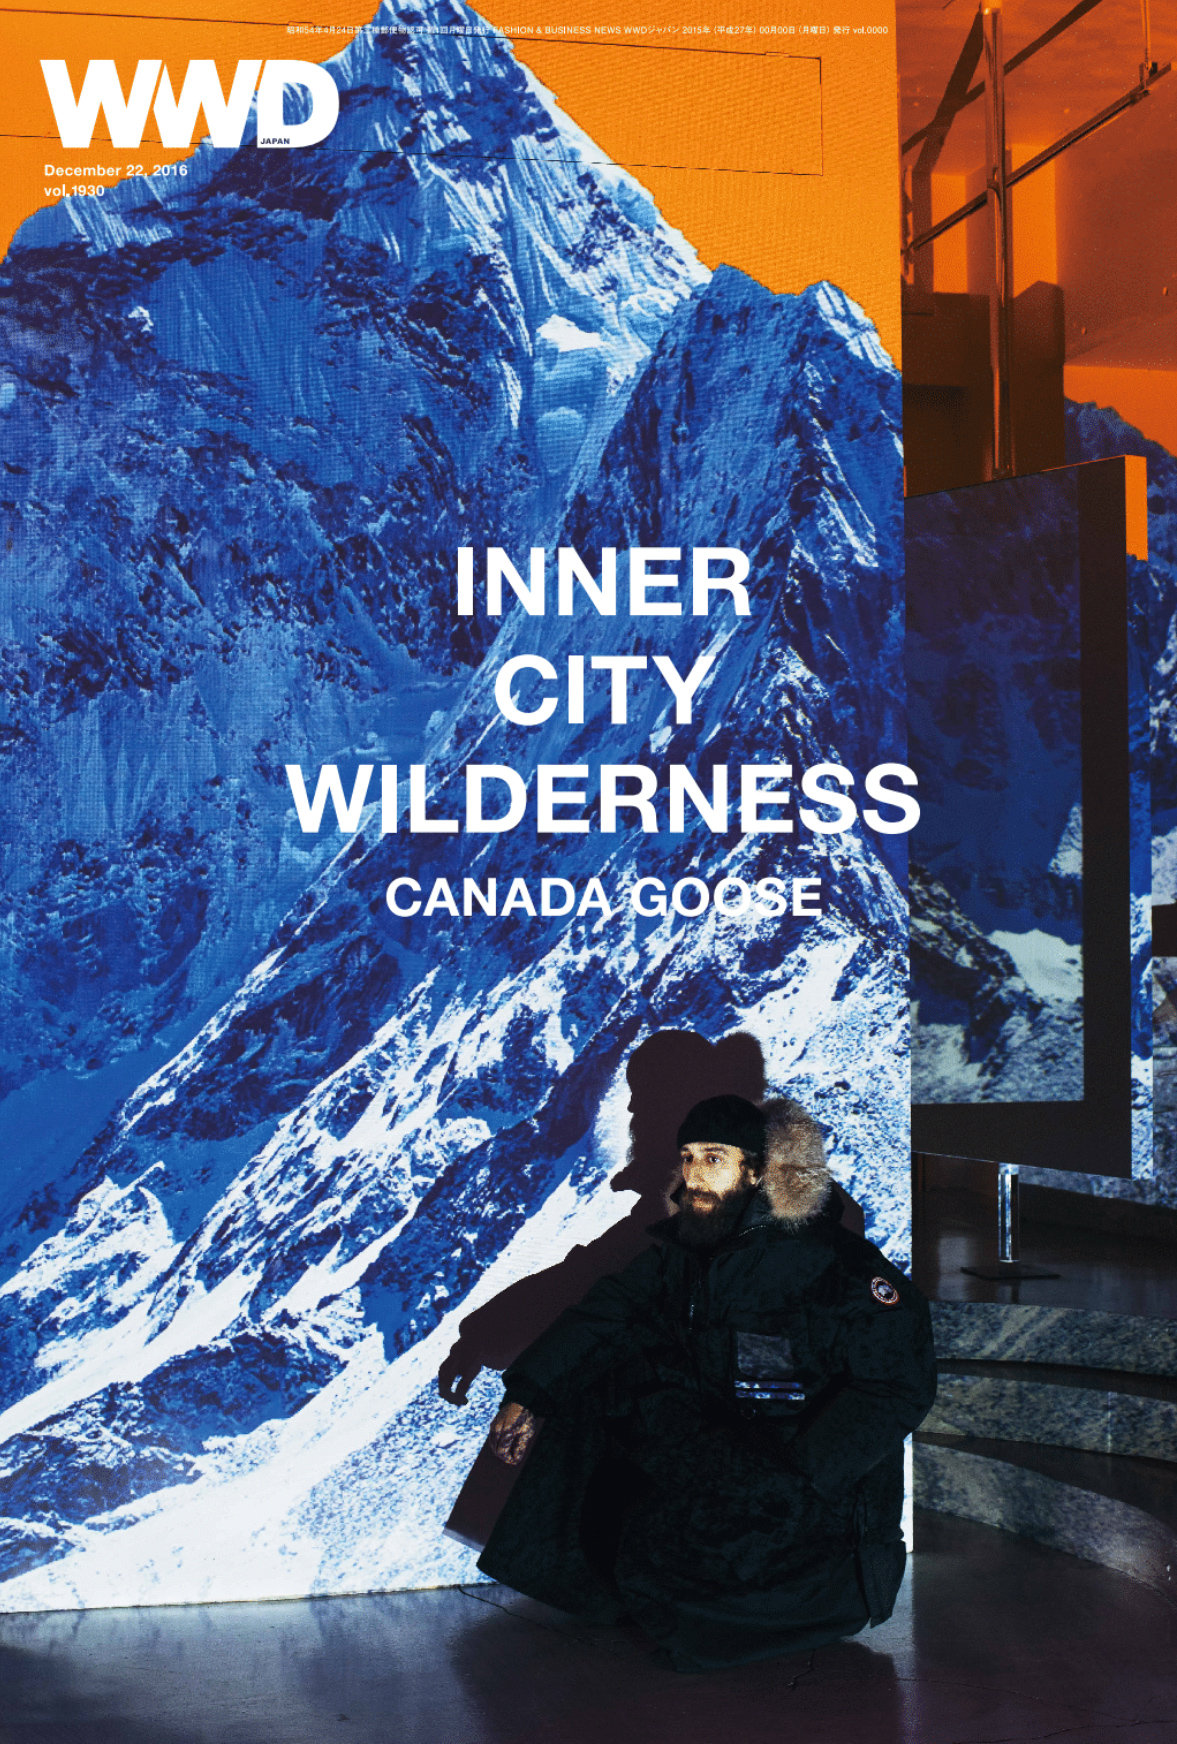 CANADA GOOSE – INNER CITY WILDERNESS